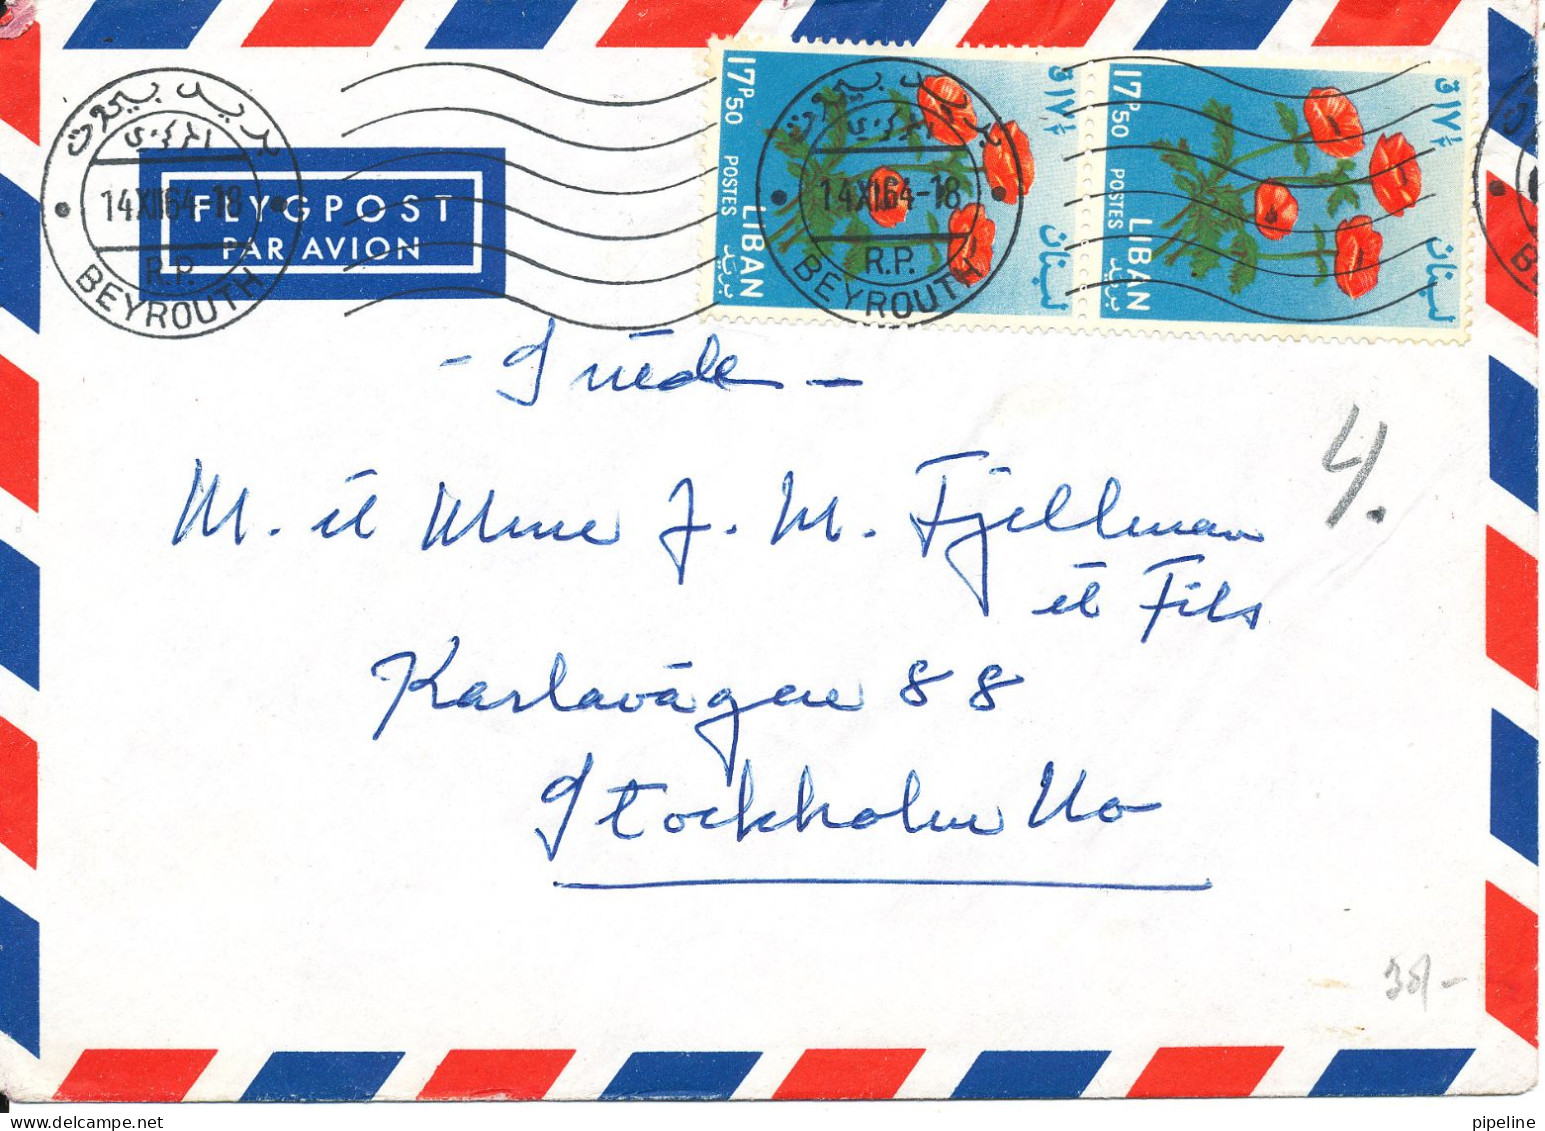 Lebanon Air Mail Cover Sent To Sweden 14-11-1964 - Lebanon